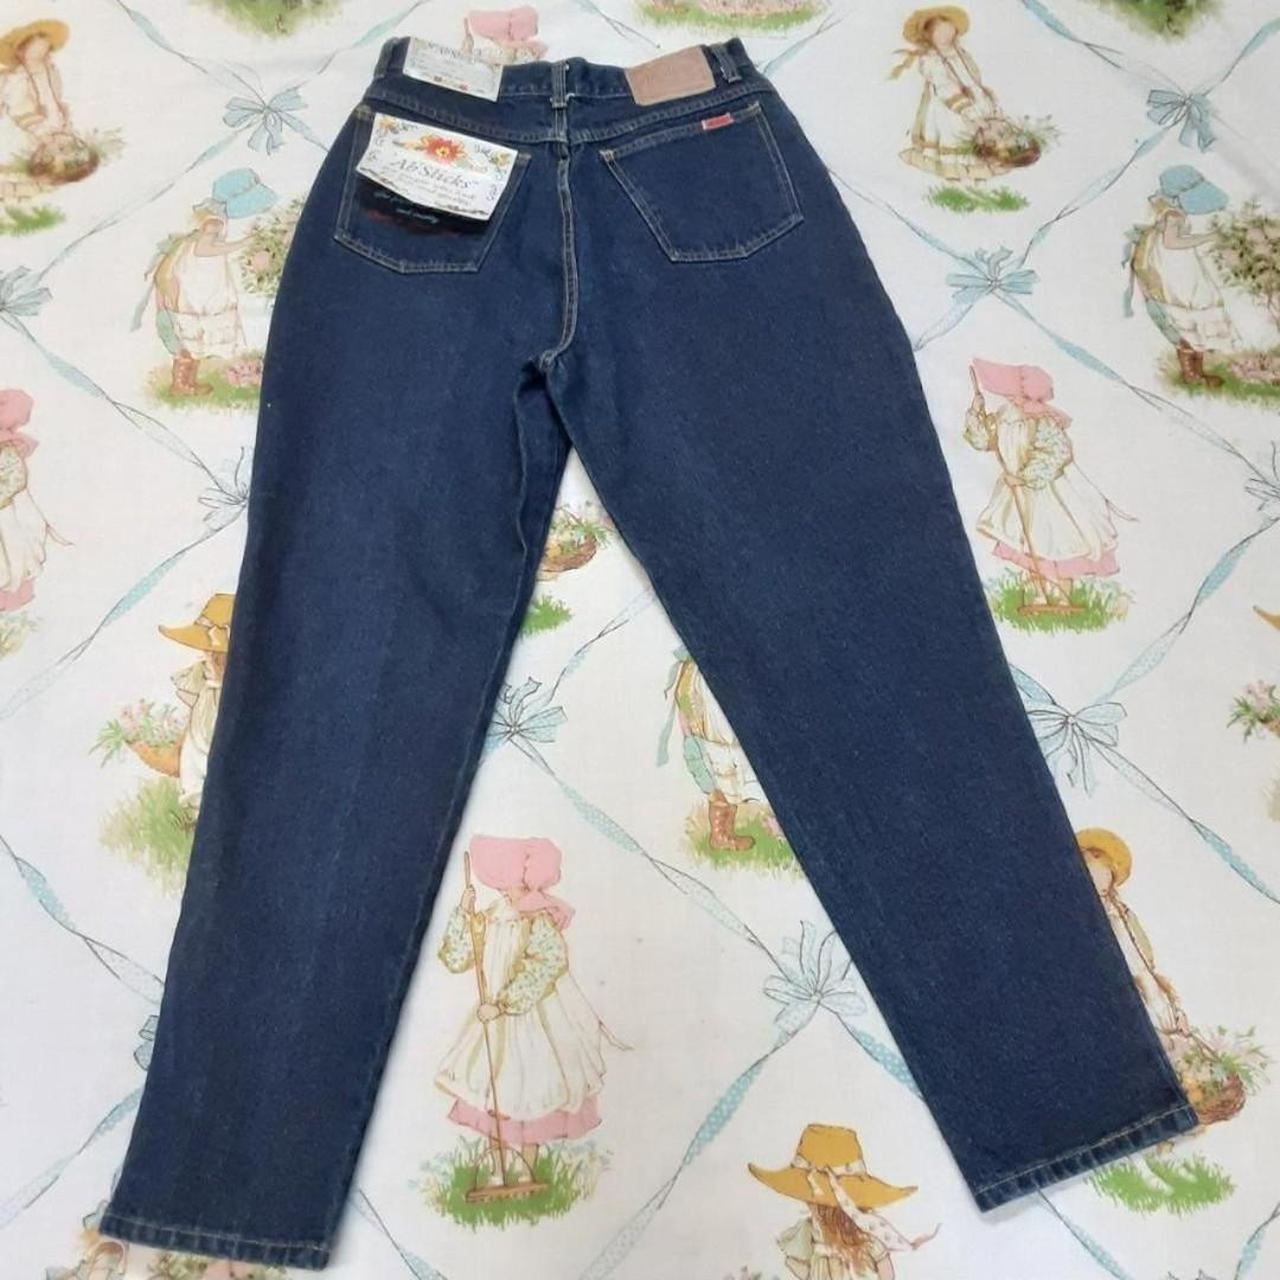 Product Image 2 - Vintage high-waisted Ab'Slicks jeans
Dark blue